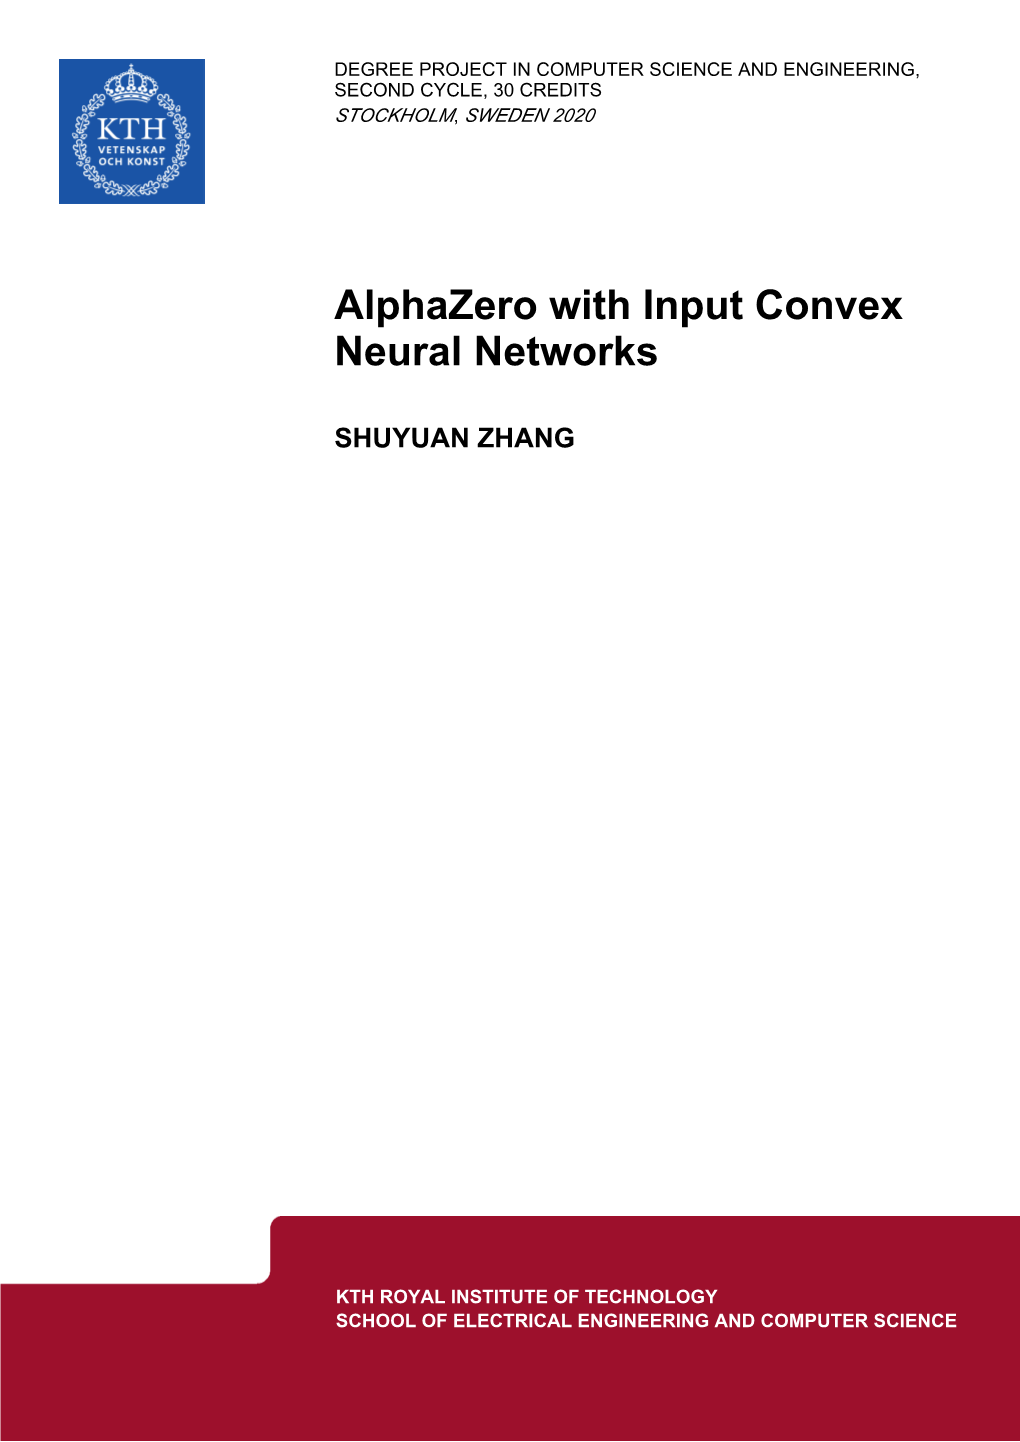 Alphazero with Input Convex Neural Networks